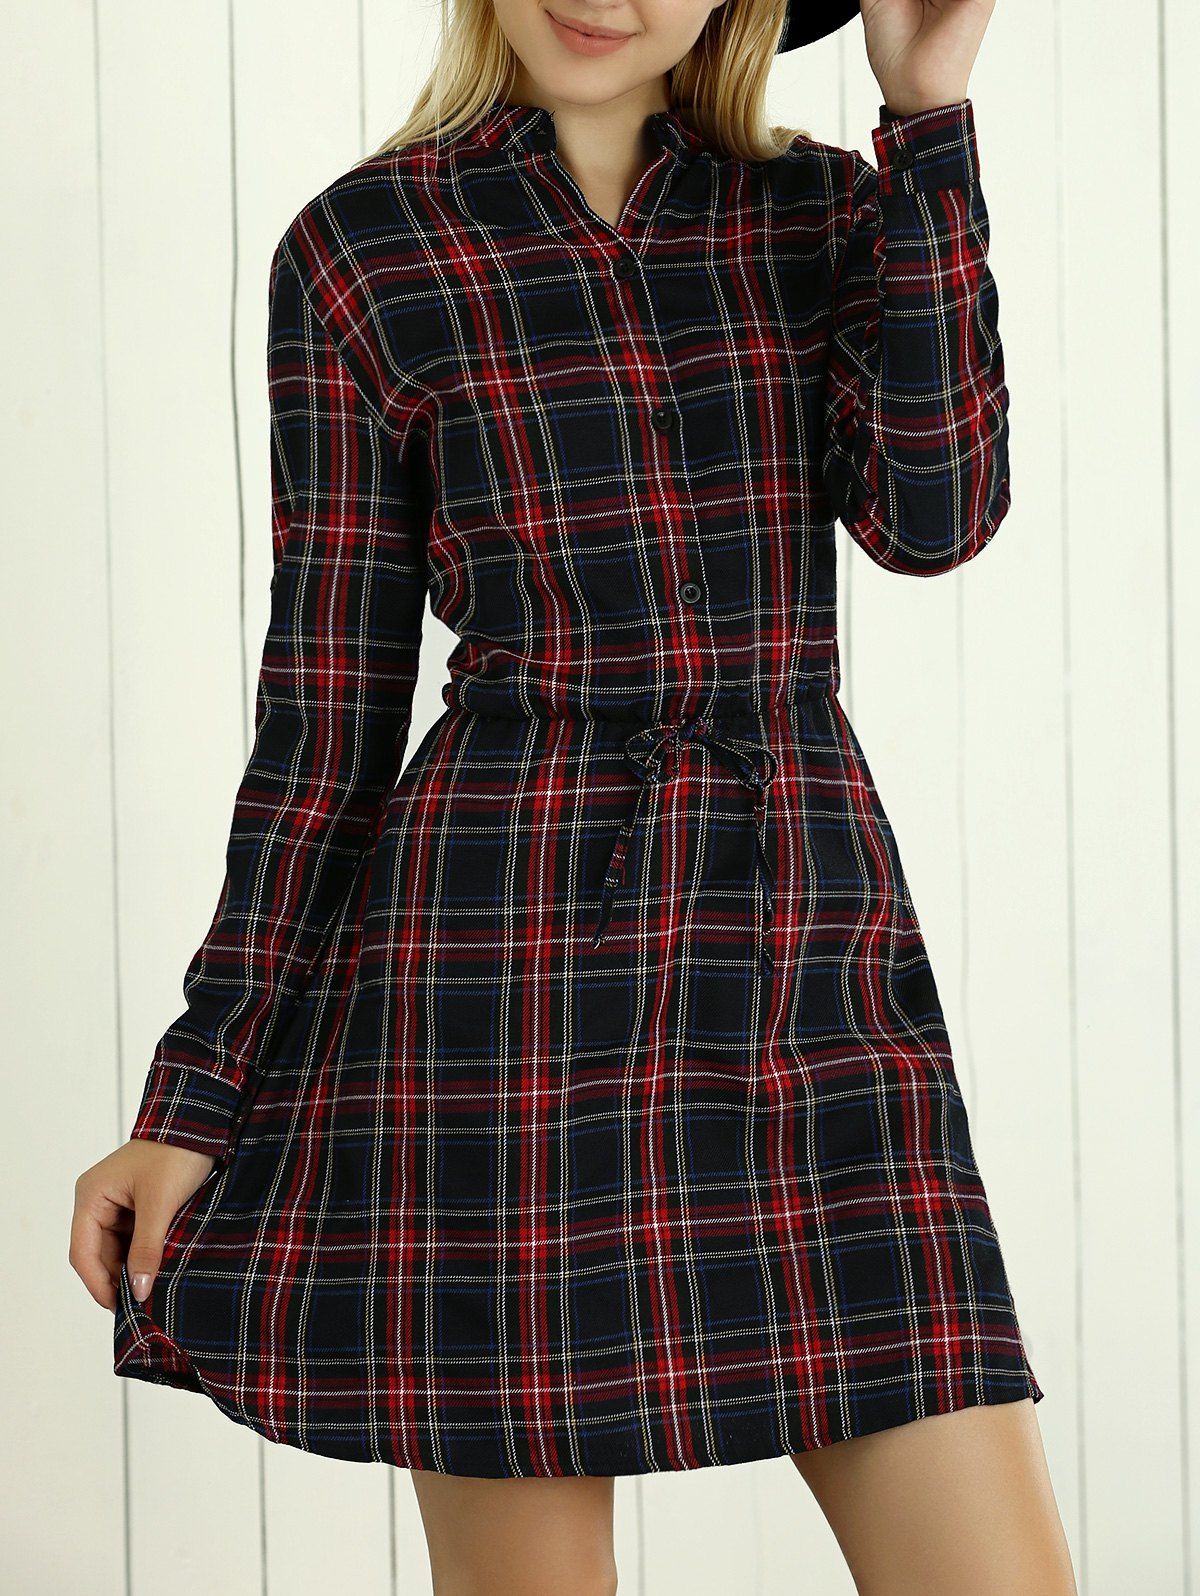 https://www.dresslily.com/long-sleeves-checkered-drawstring-dress-product1596389.html?lkid=15587927